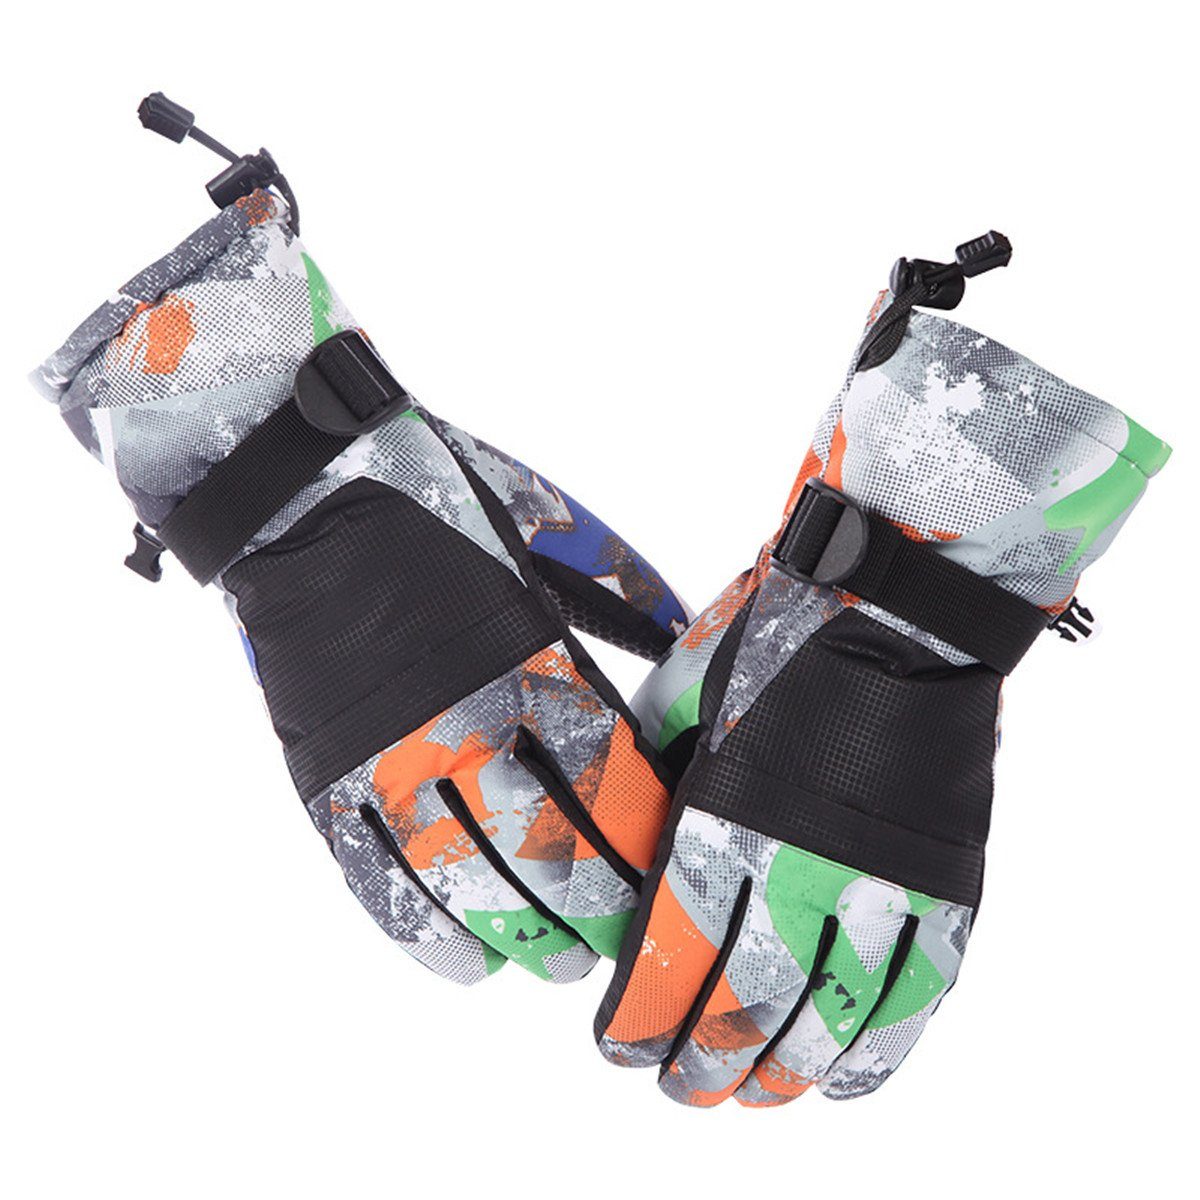 Die Sterne Langlaufhandschuhe Kinder/Männer/Damen Winter-Outdoor-Sport-Snowboard-Handschuhe Schwarz | Langlaufhandschuhe